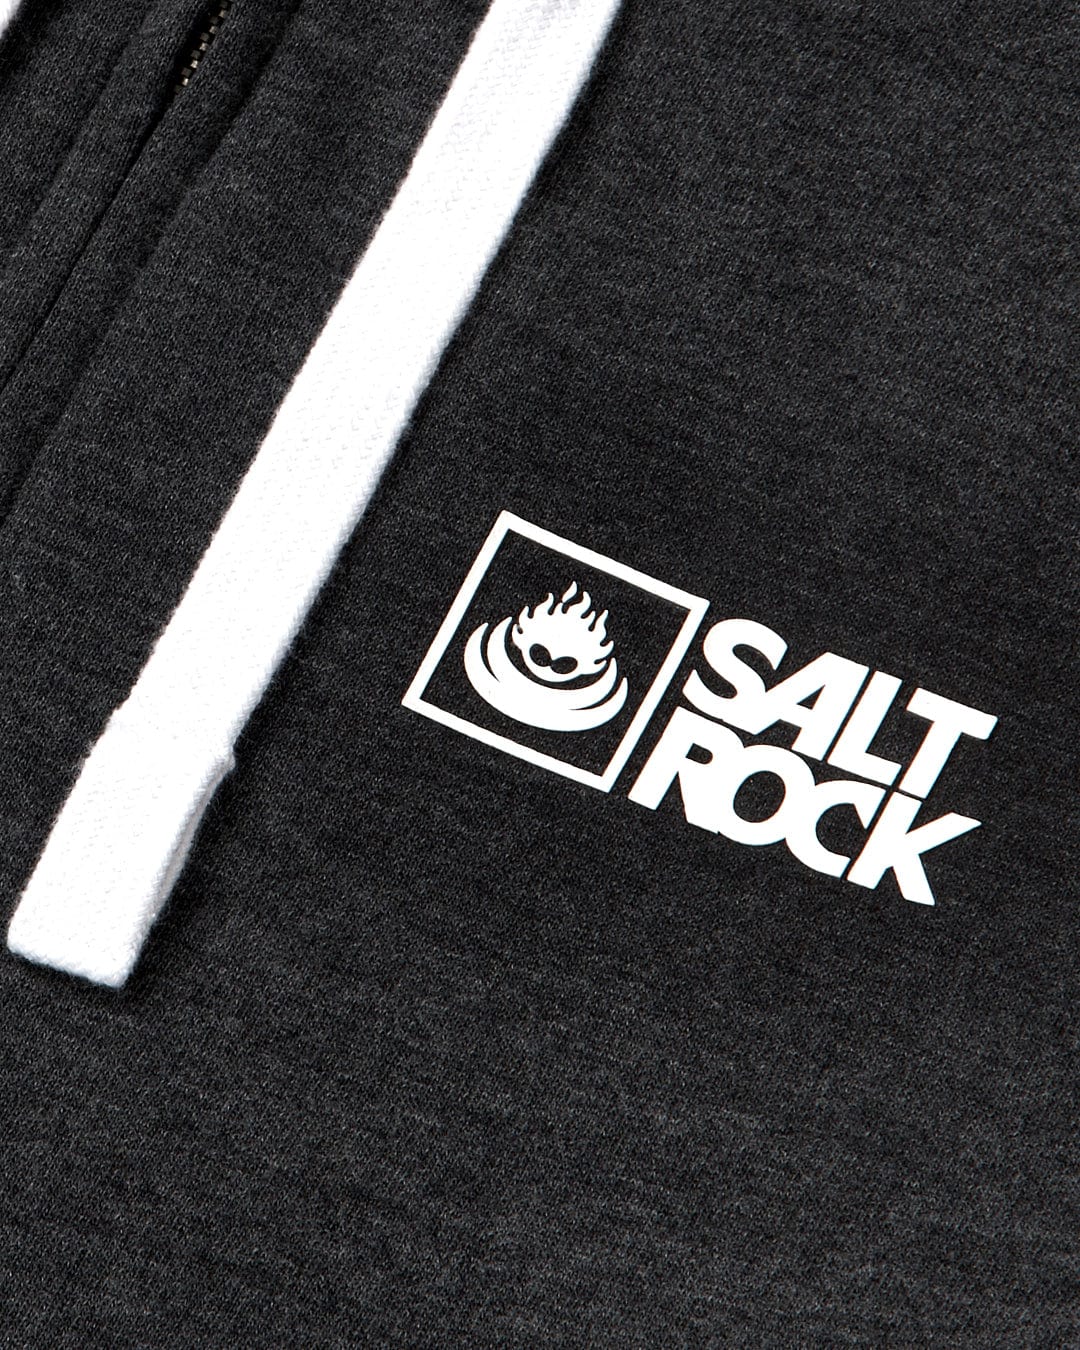 The Saltrock Original - Mens Zip Hood - Dark Grey logo on a black, cotton/polyester blend hoodie with a hood.